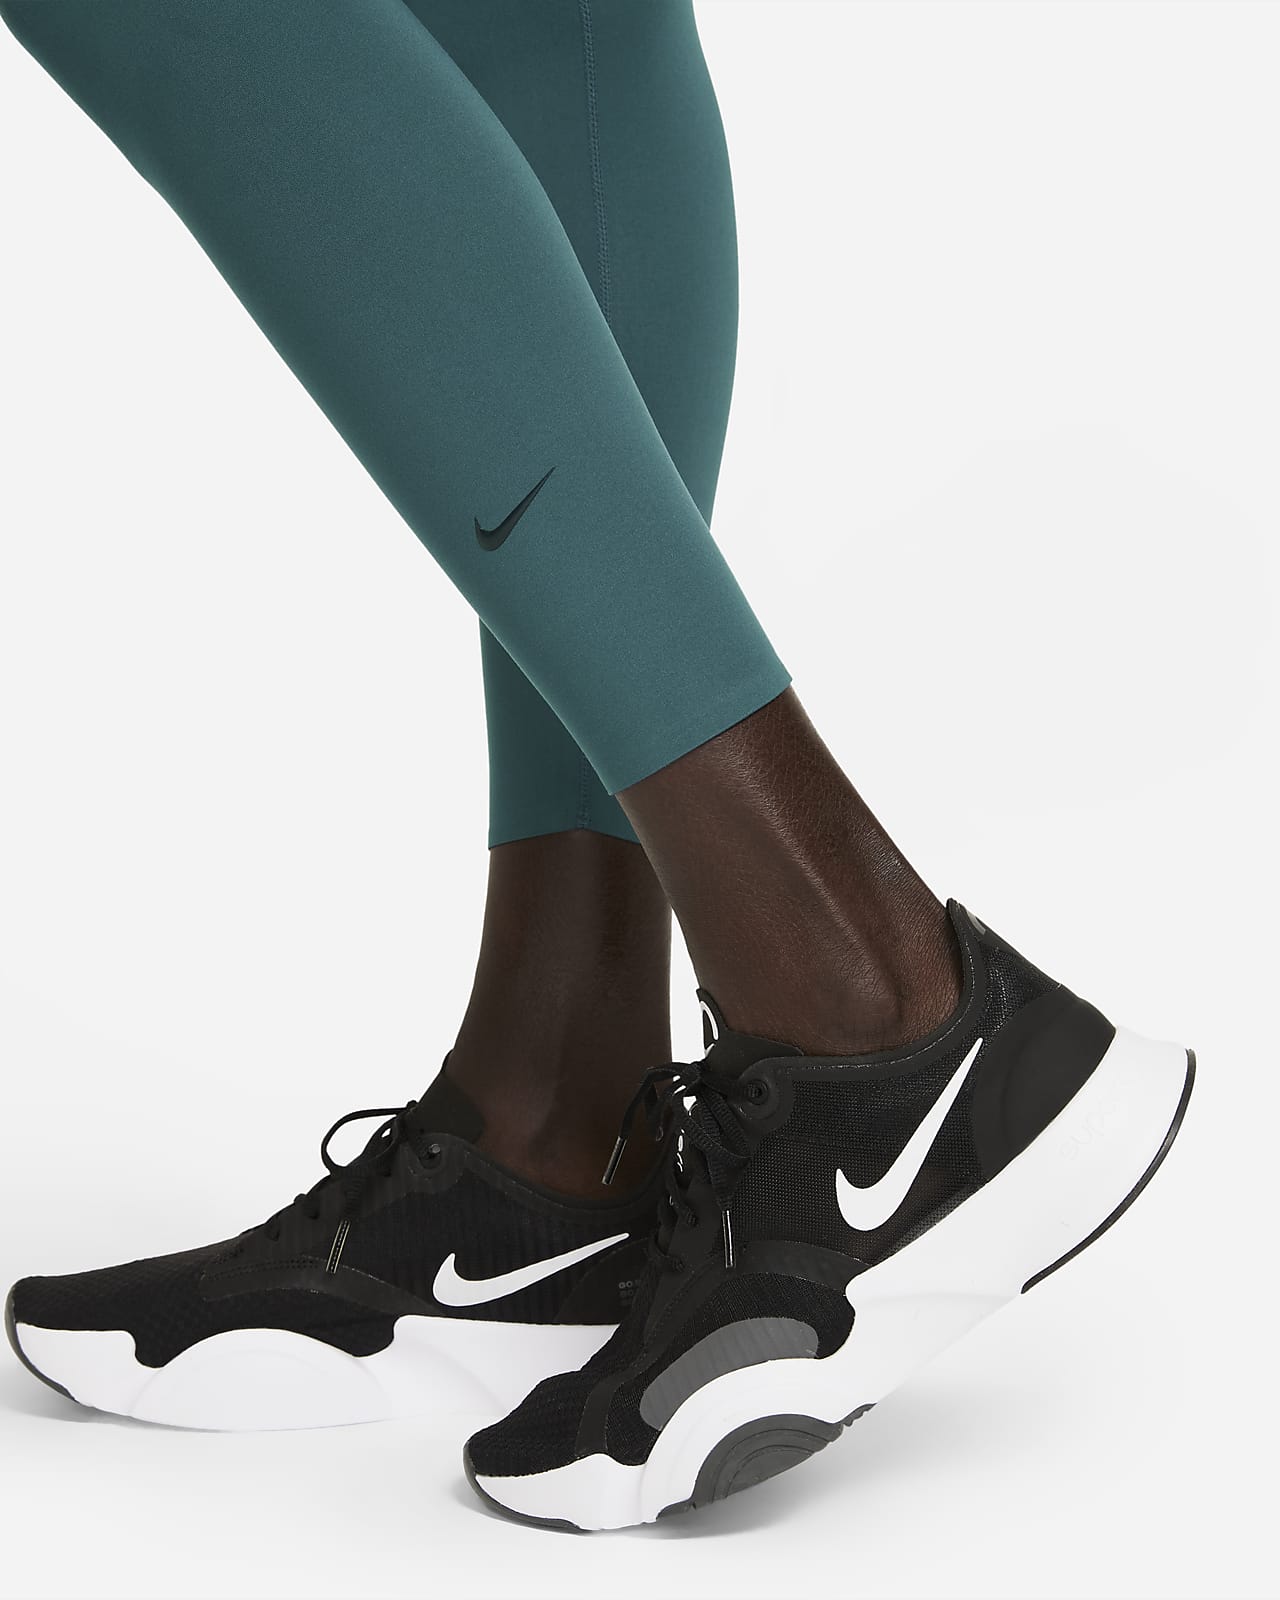 Nike One Luxe Women's Mid-Rise 7/8 Leggings.